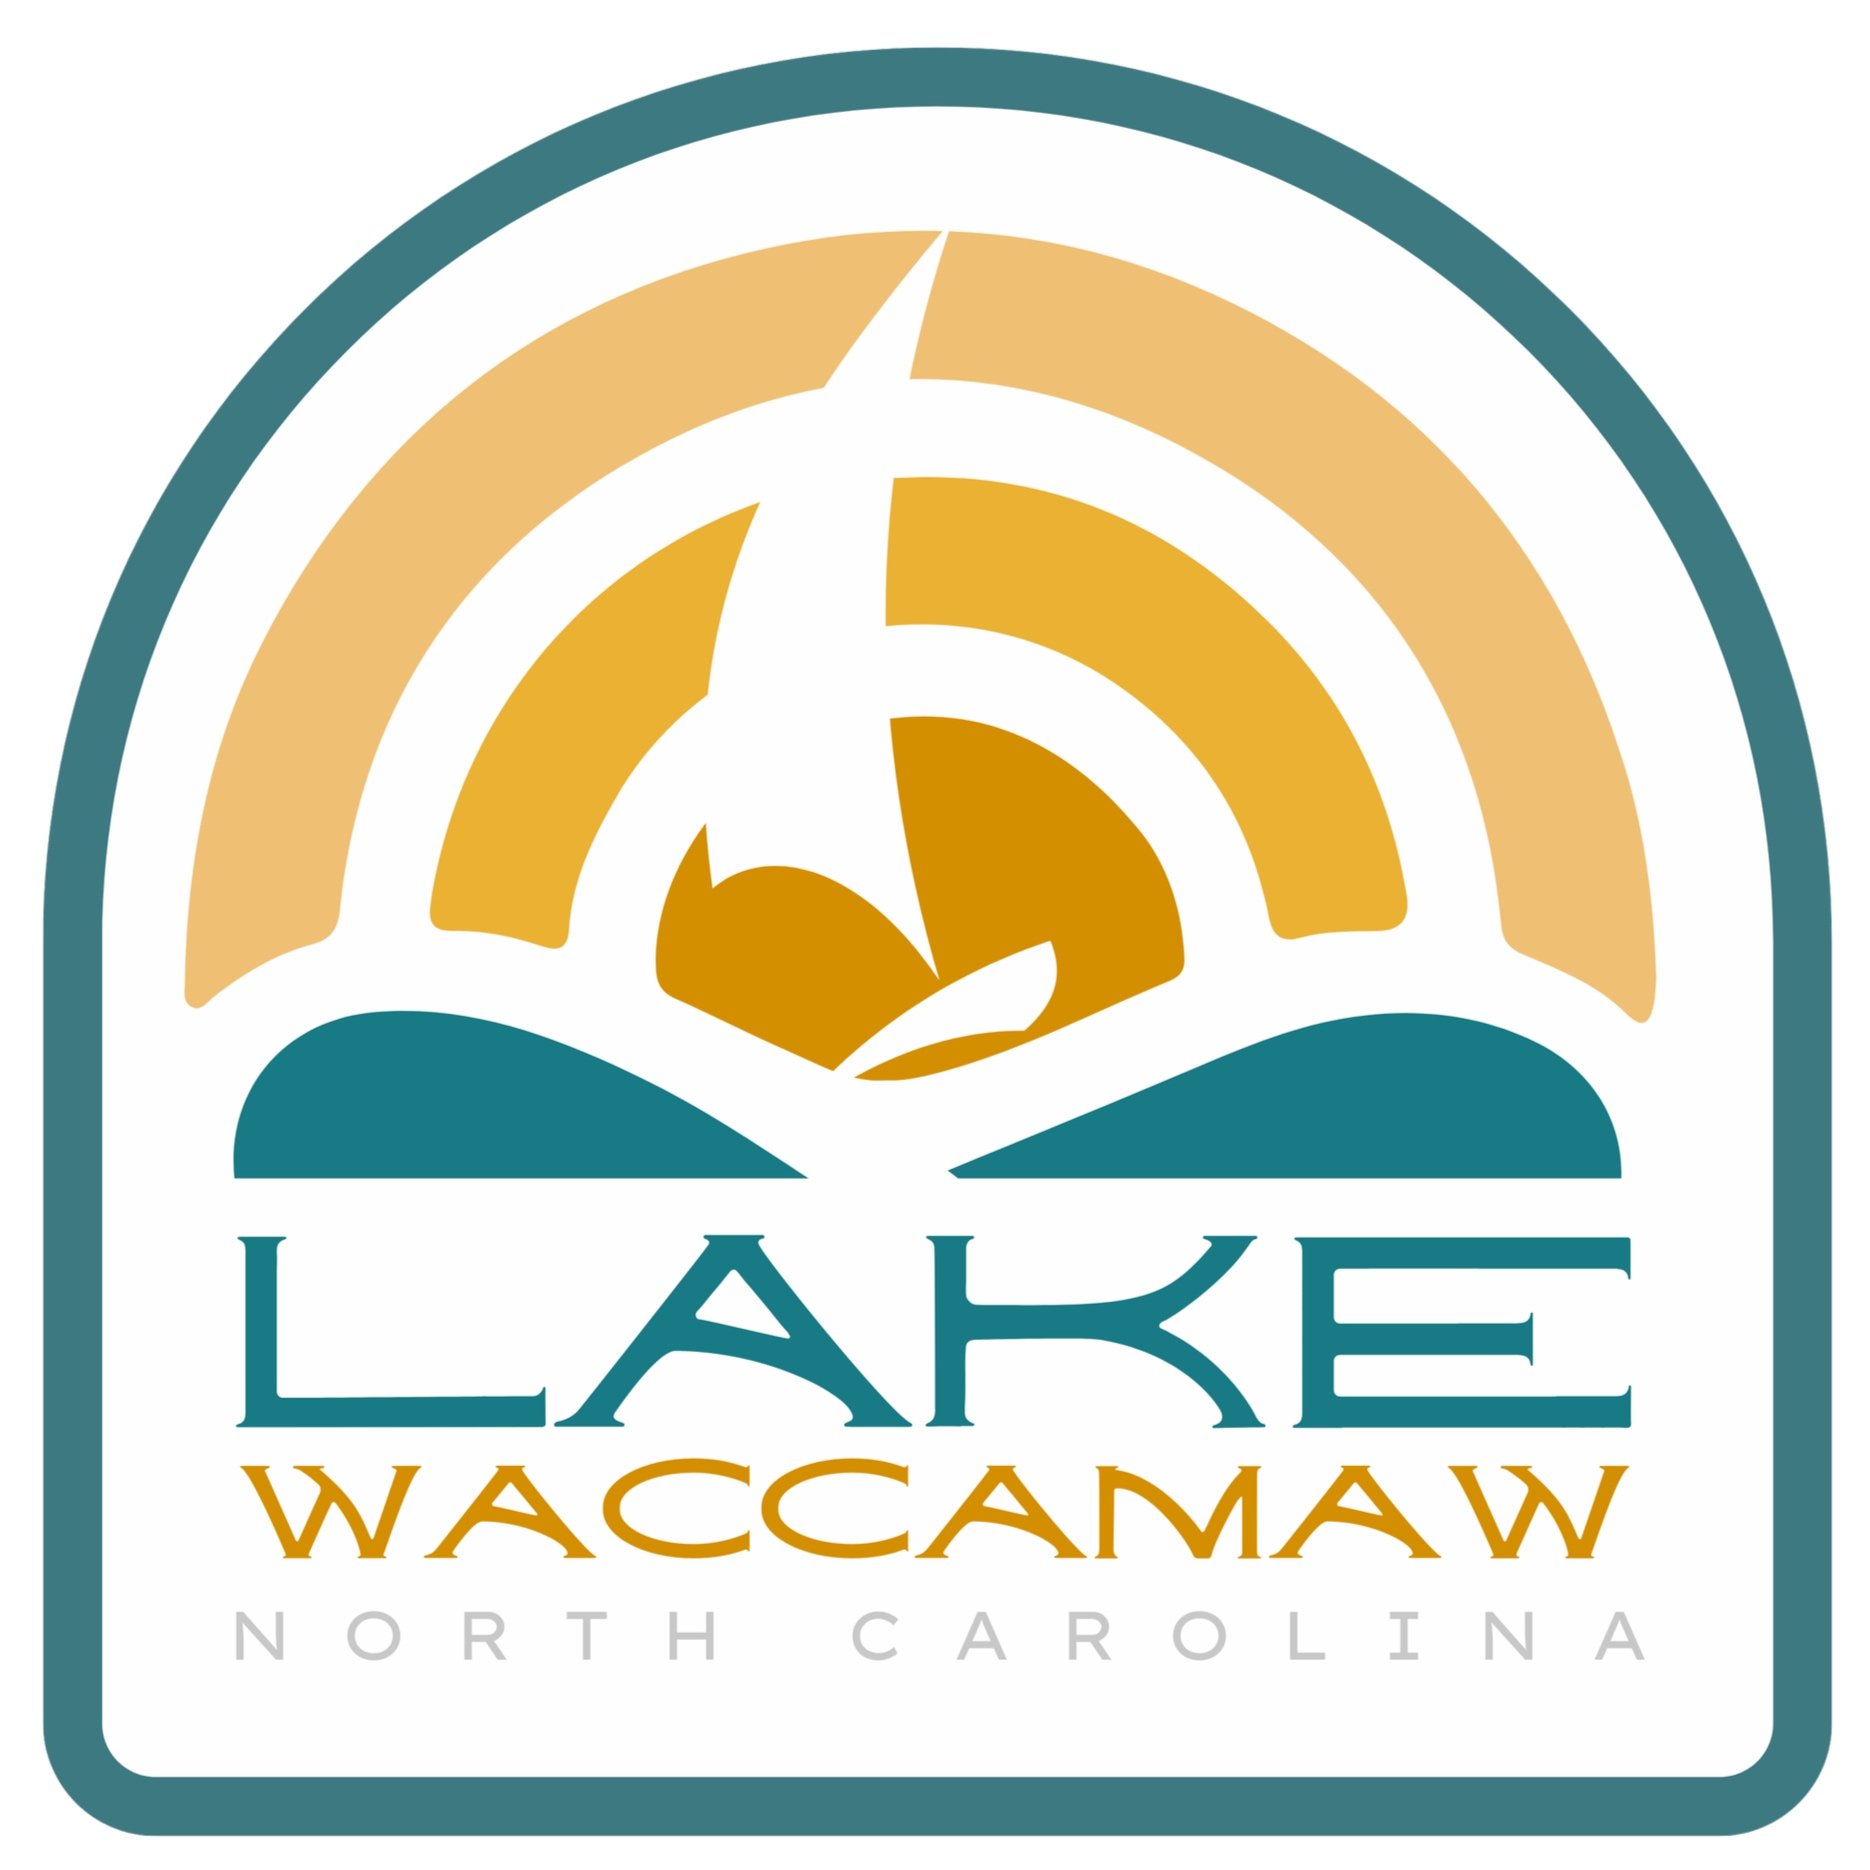 The Town of Lake Waccamaw